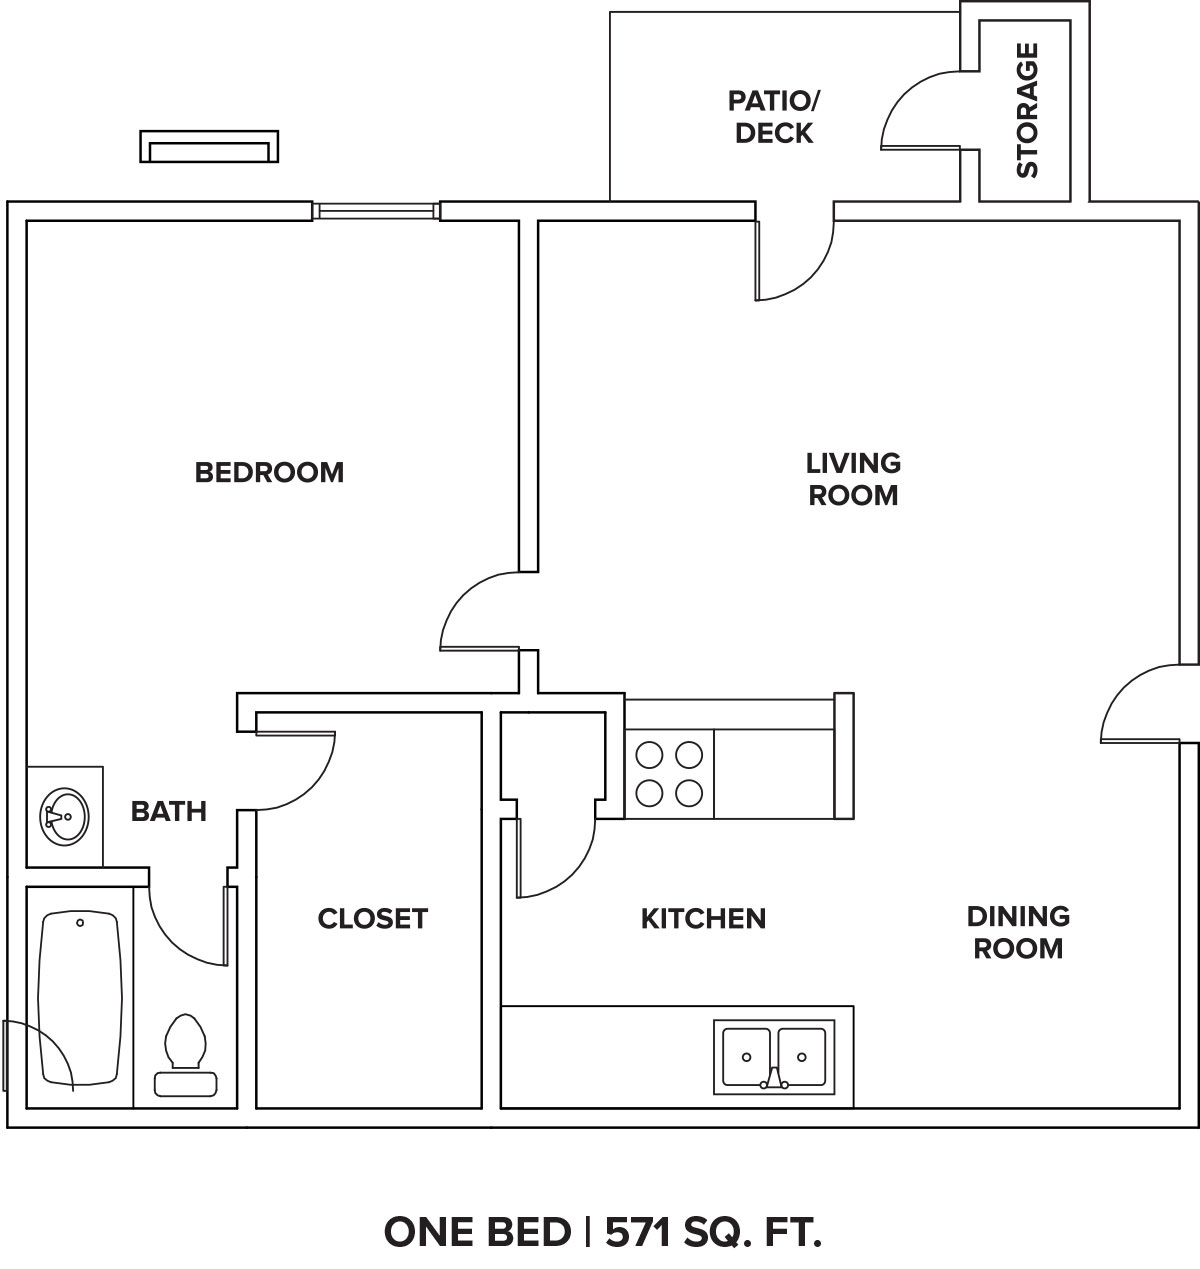 Villas-of-Oak-Creste_Floor-Plans_V2_One-Bed-571-sq-ft.jpg